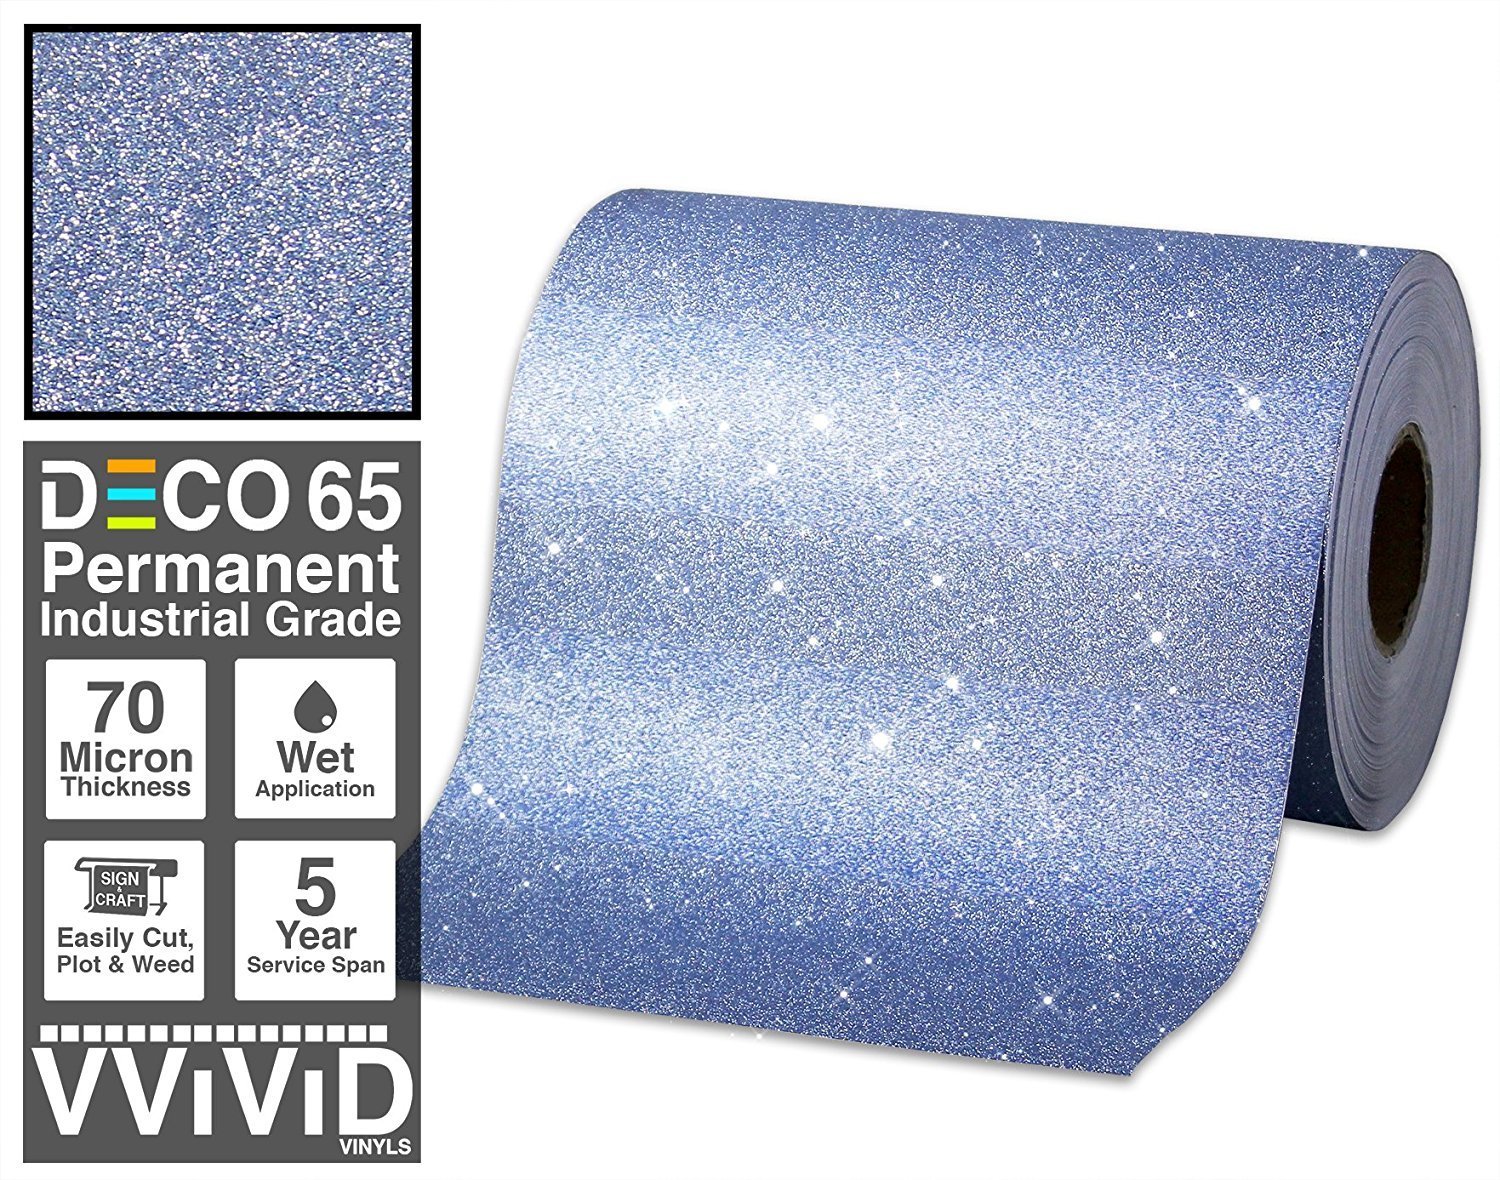 Deco65 Blue Glitter Craft Vinyl - The VViViD Vinyl Wrap Shop